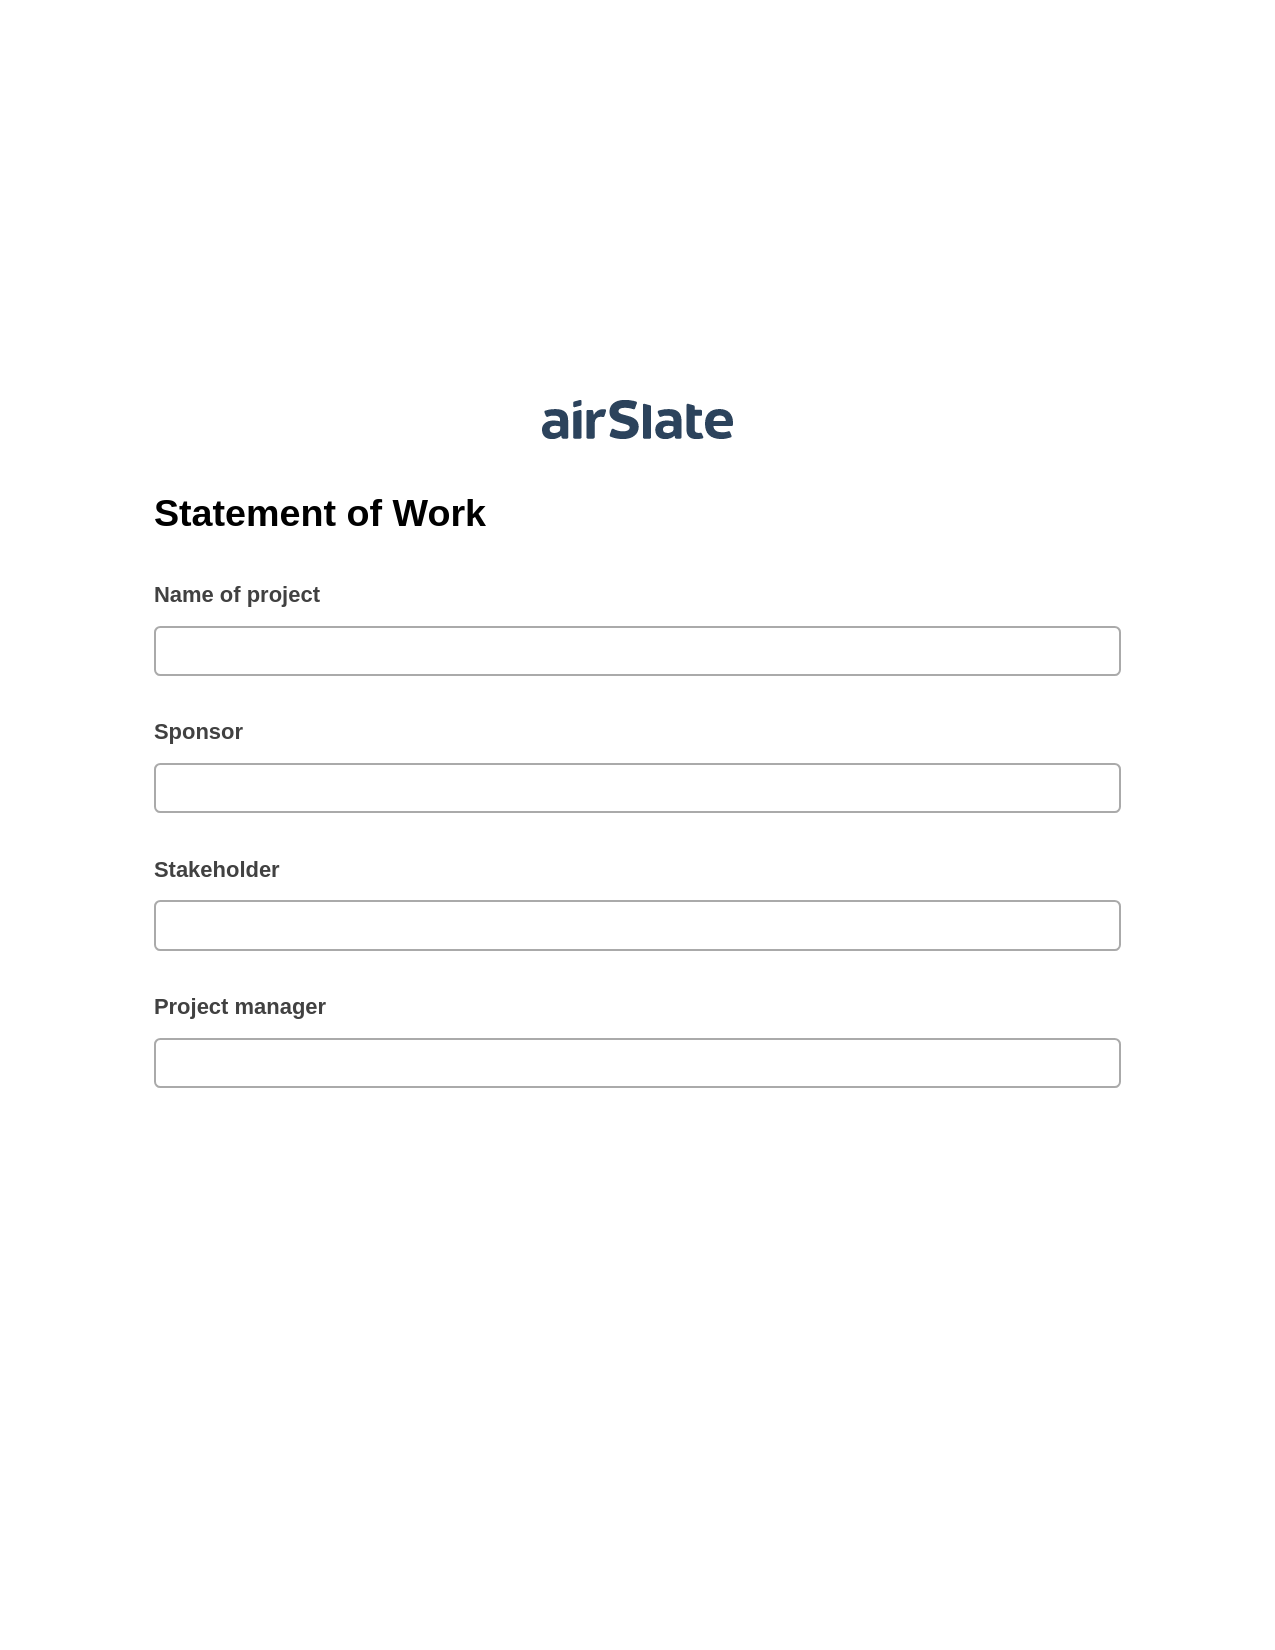 Multirole Statement of Work Pre-fill from Google Sheets Bot, Slack Notification Bot, Box Bot